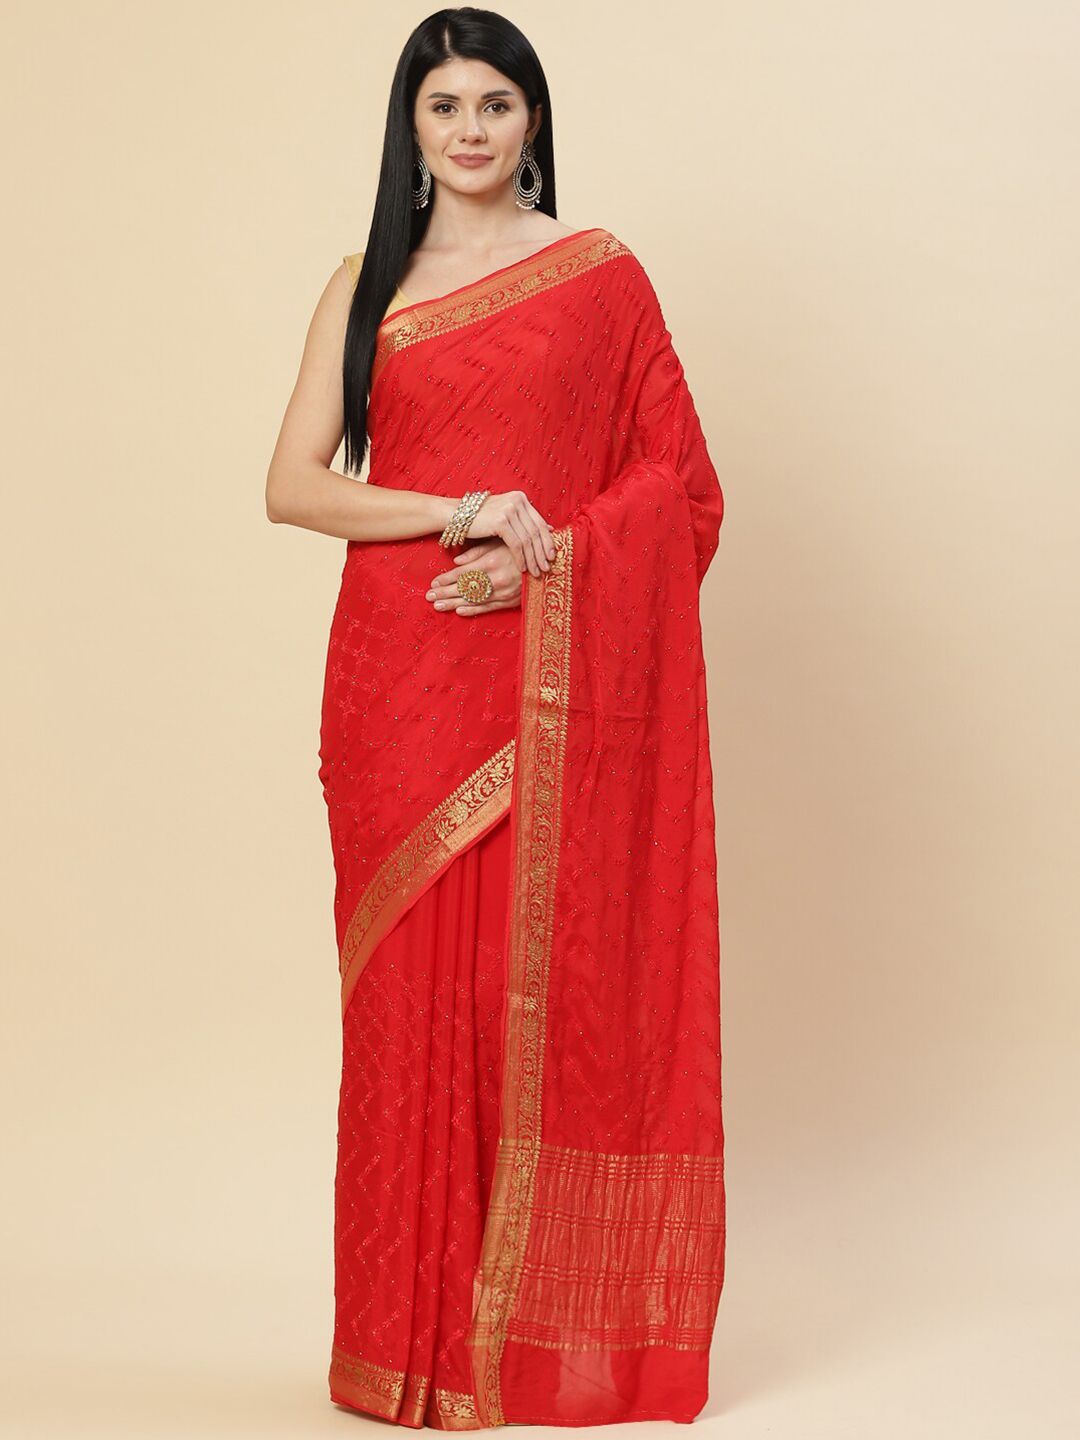 Meena Bazaar Red & Gold-Toned Floral Zari Saree Price in India